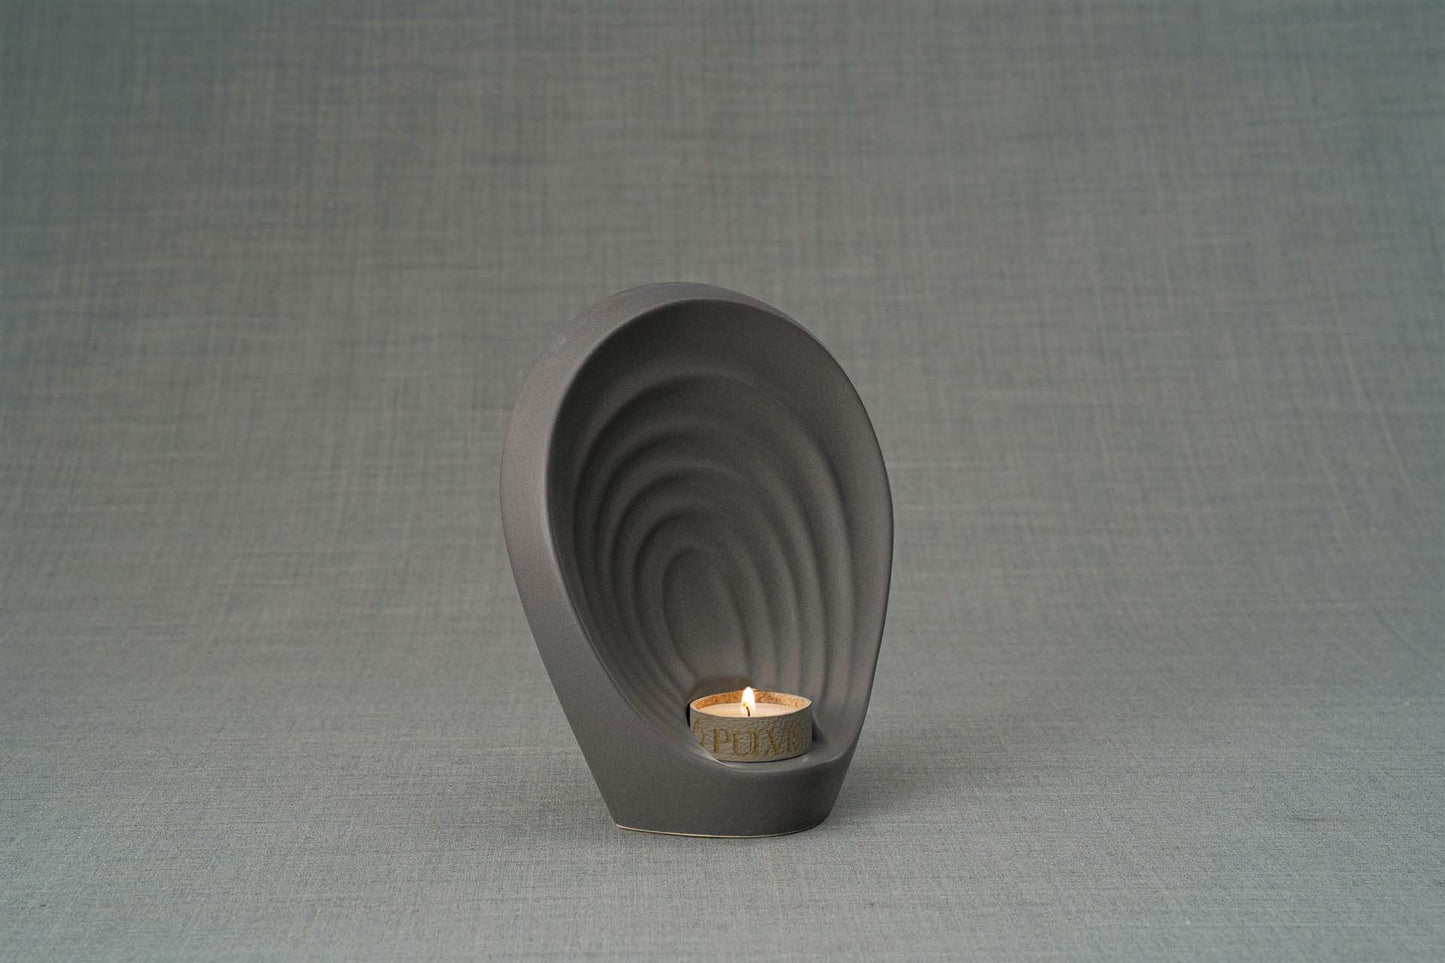 Pulvis Art Urns Keepsake Urn Handmade Cremation Keepsake Urn "Guardian" - Small | Gray Matte | Ceramic